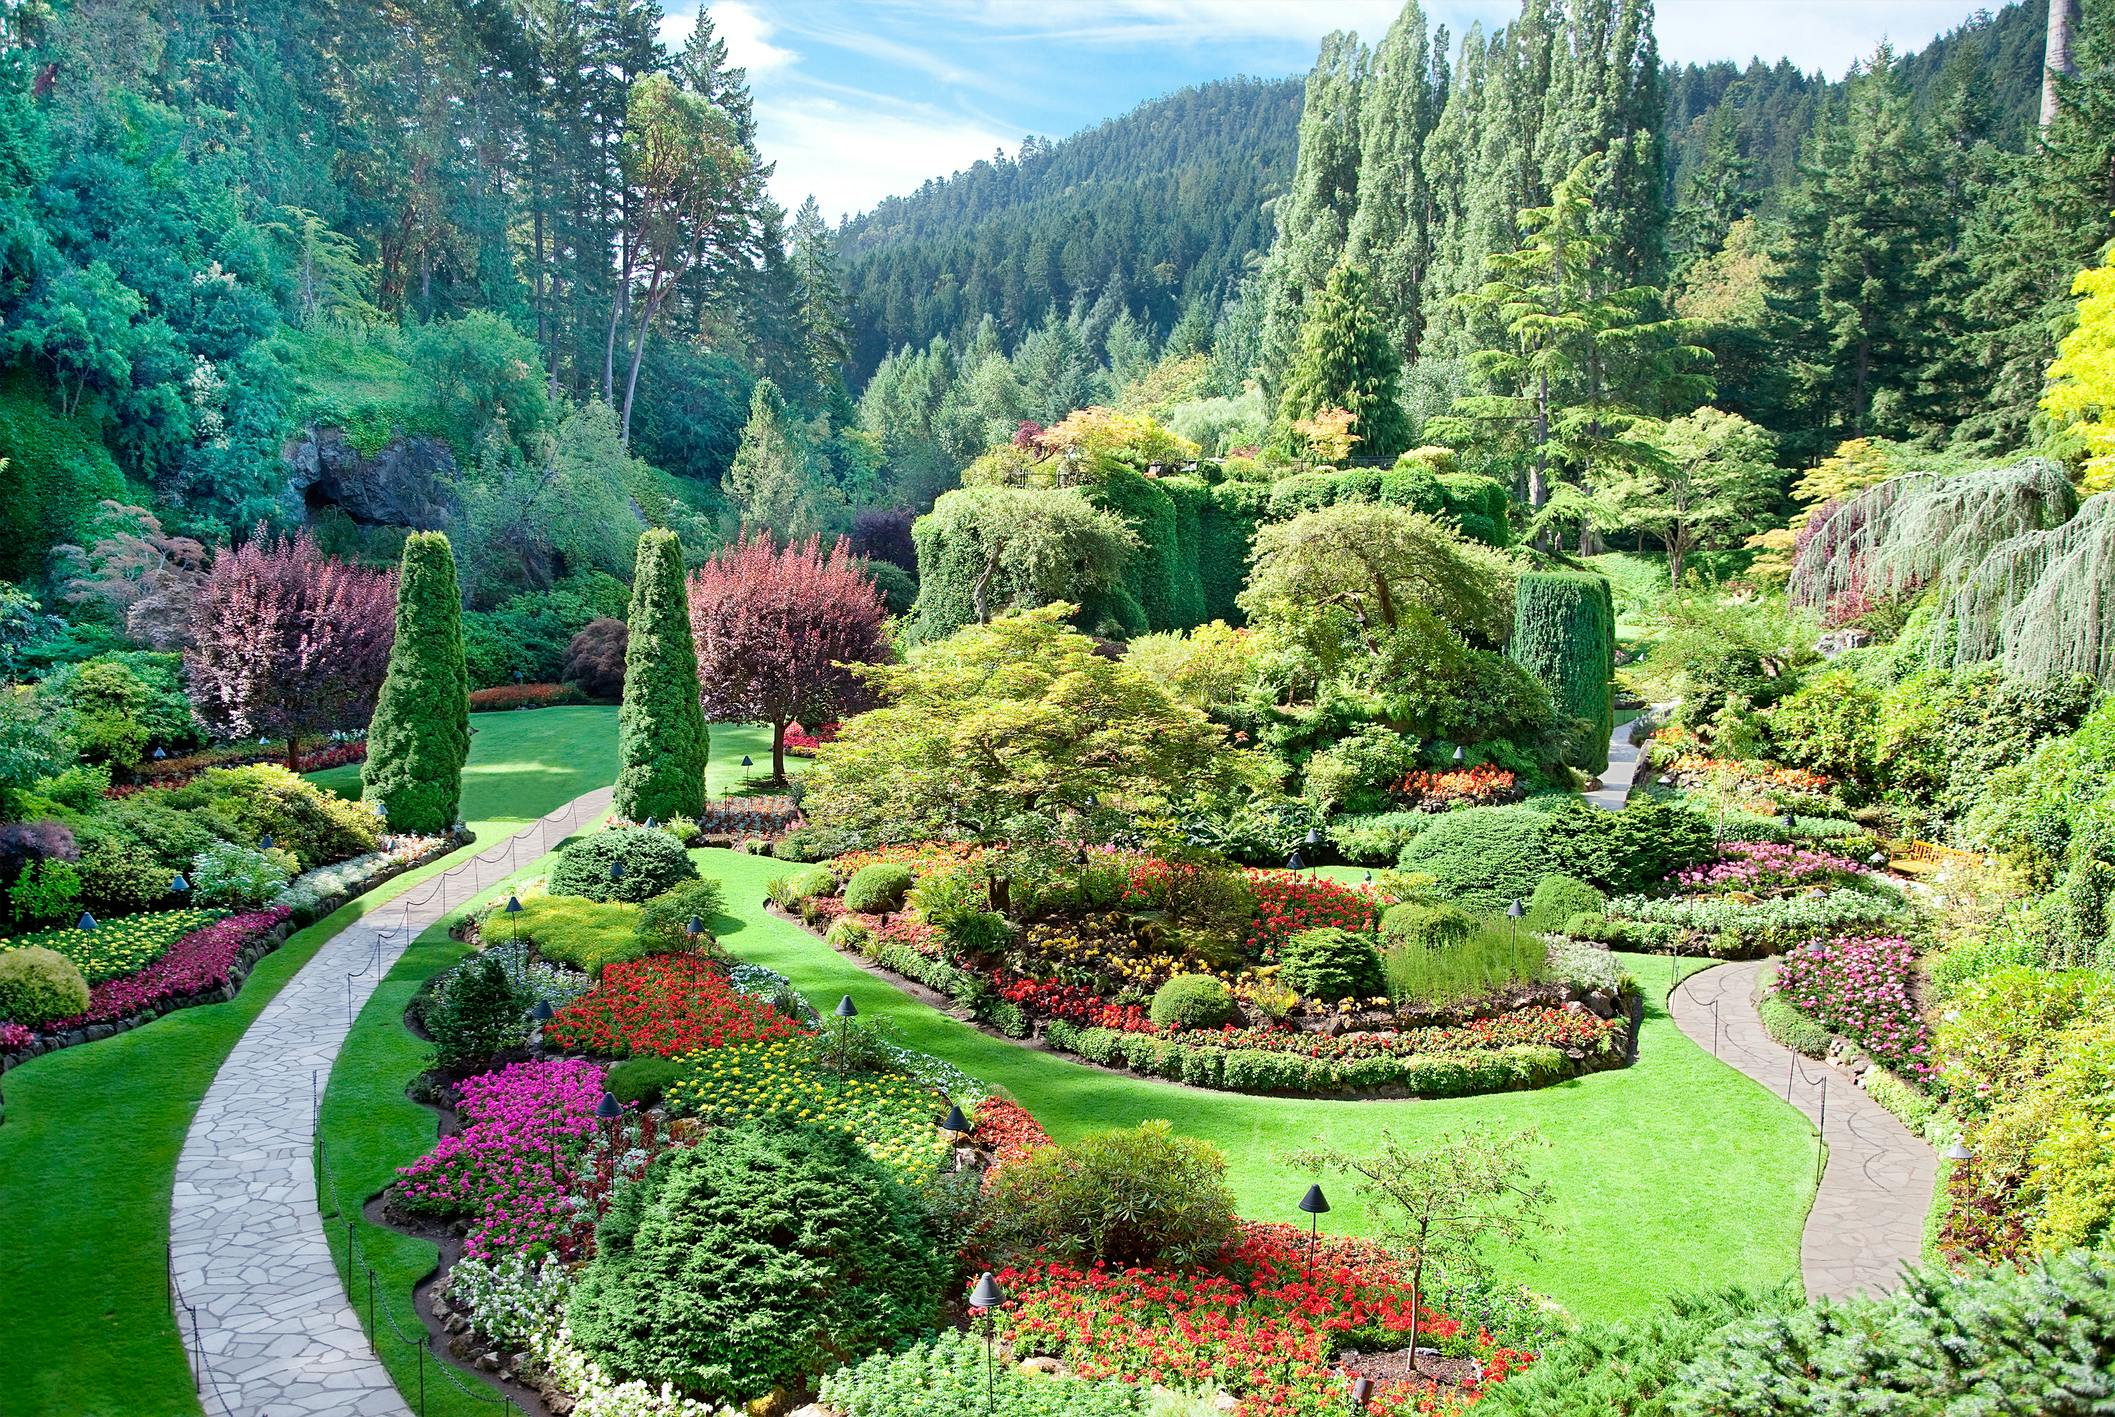 Butchart Gardens in British Columbia